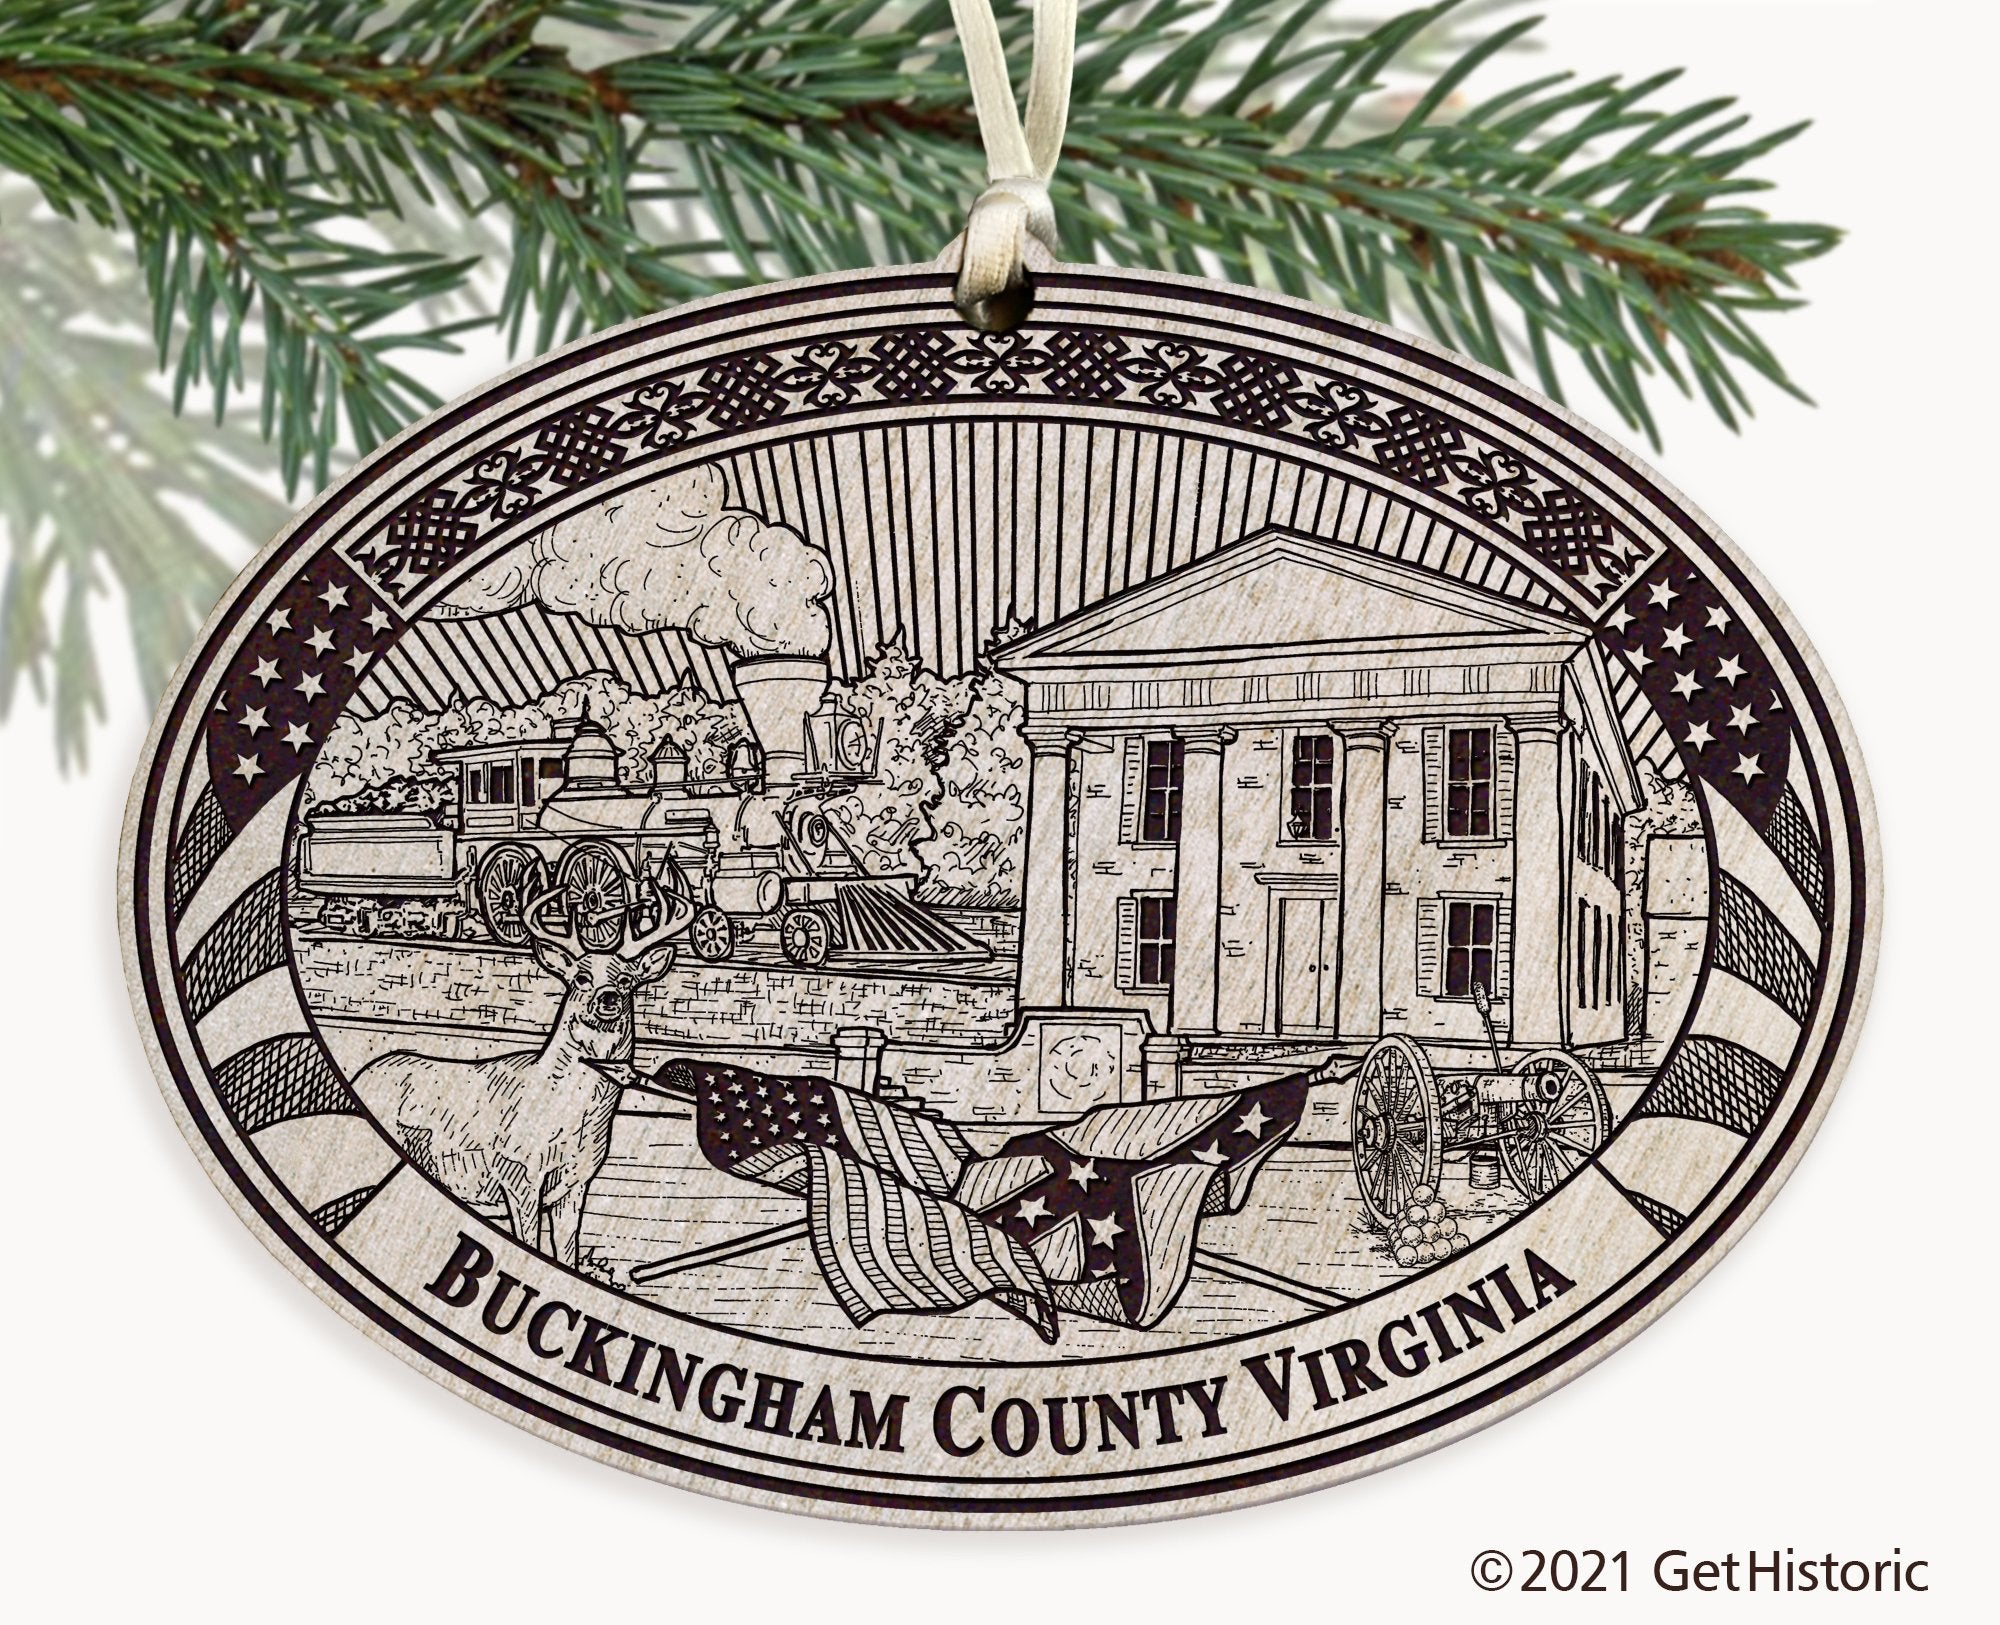 Buckingham County Virginia Engraved Ornament